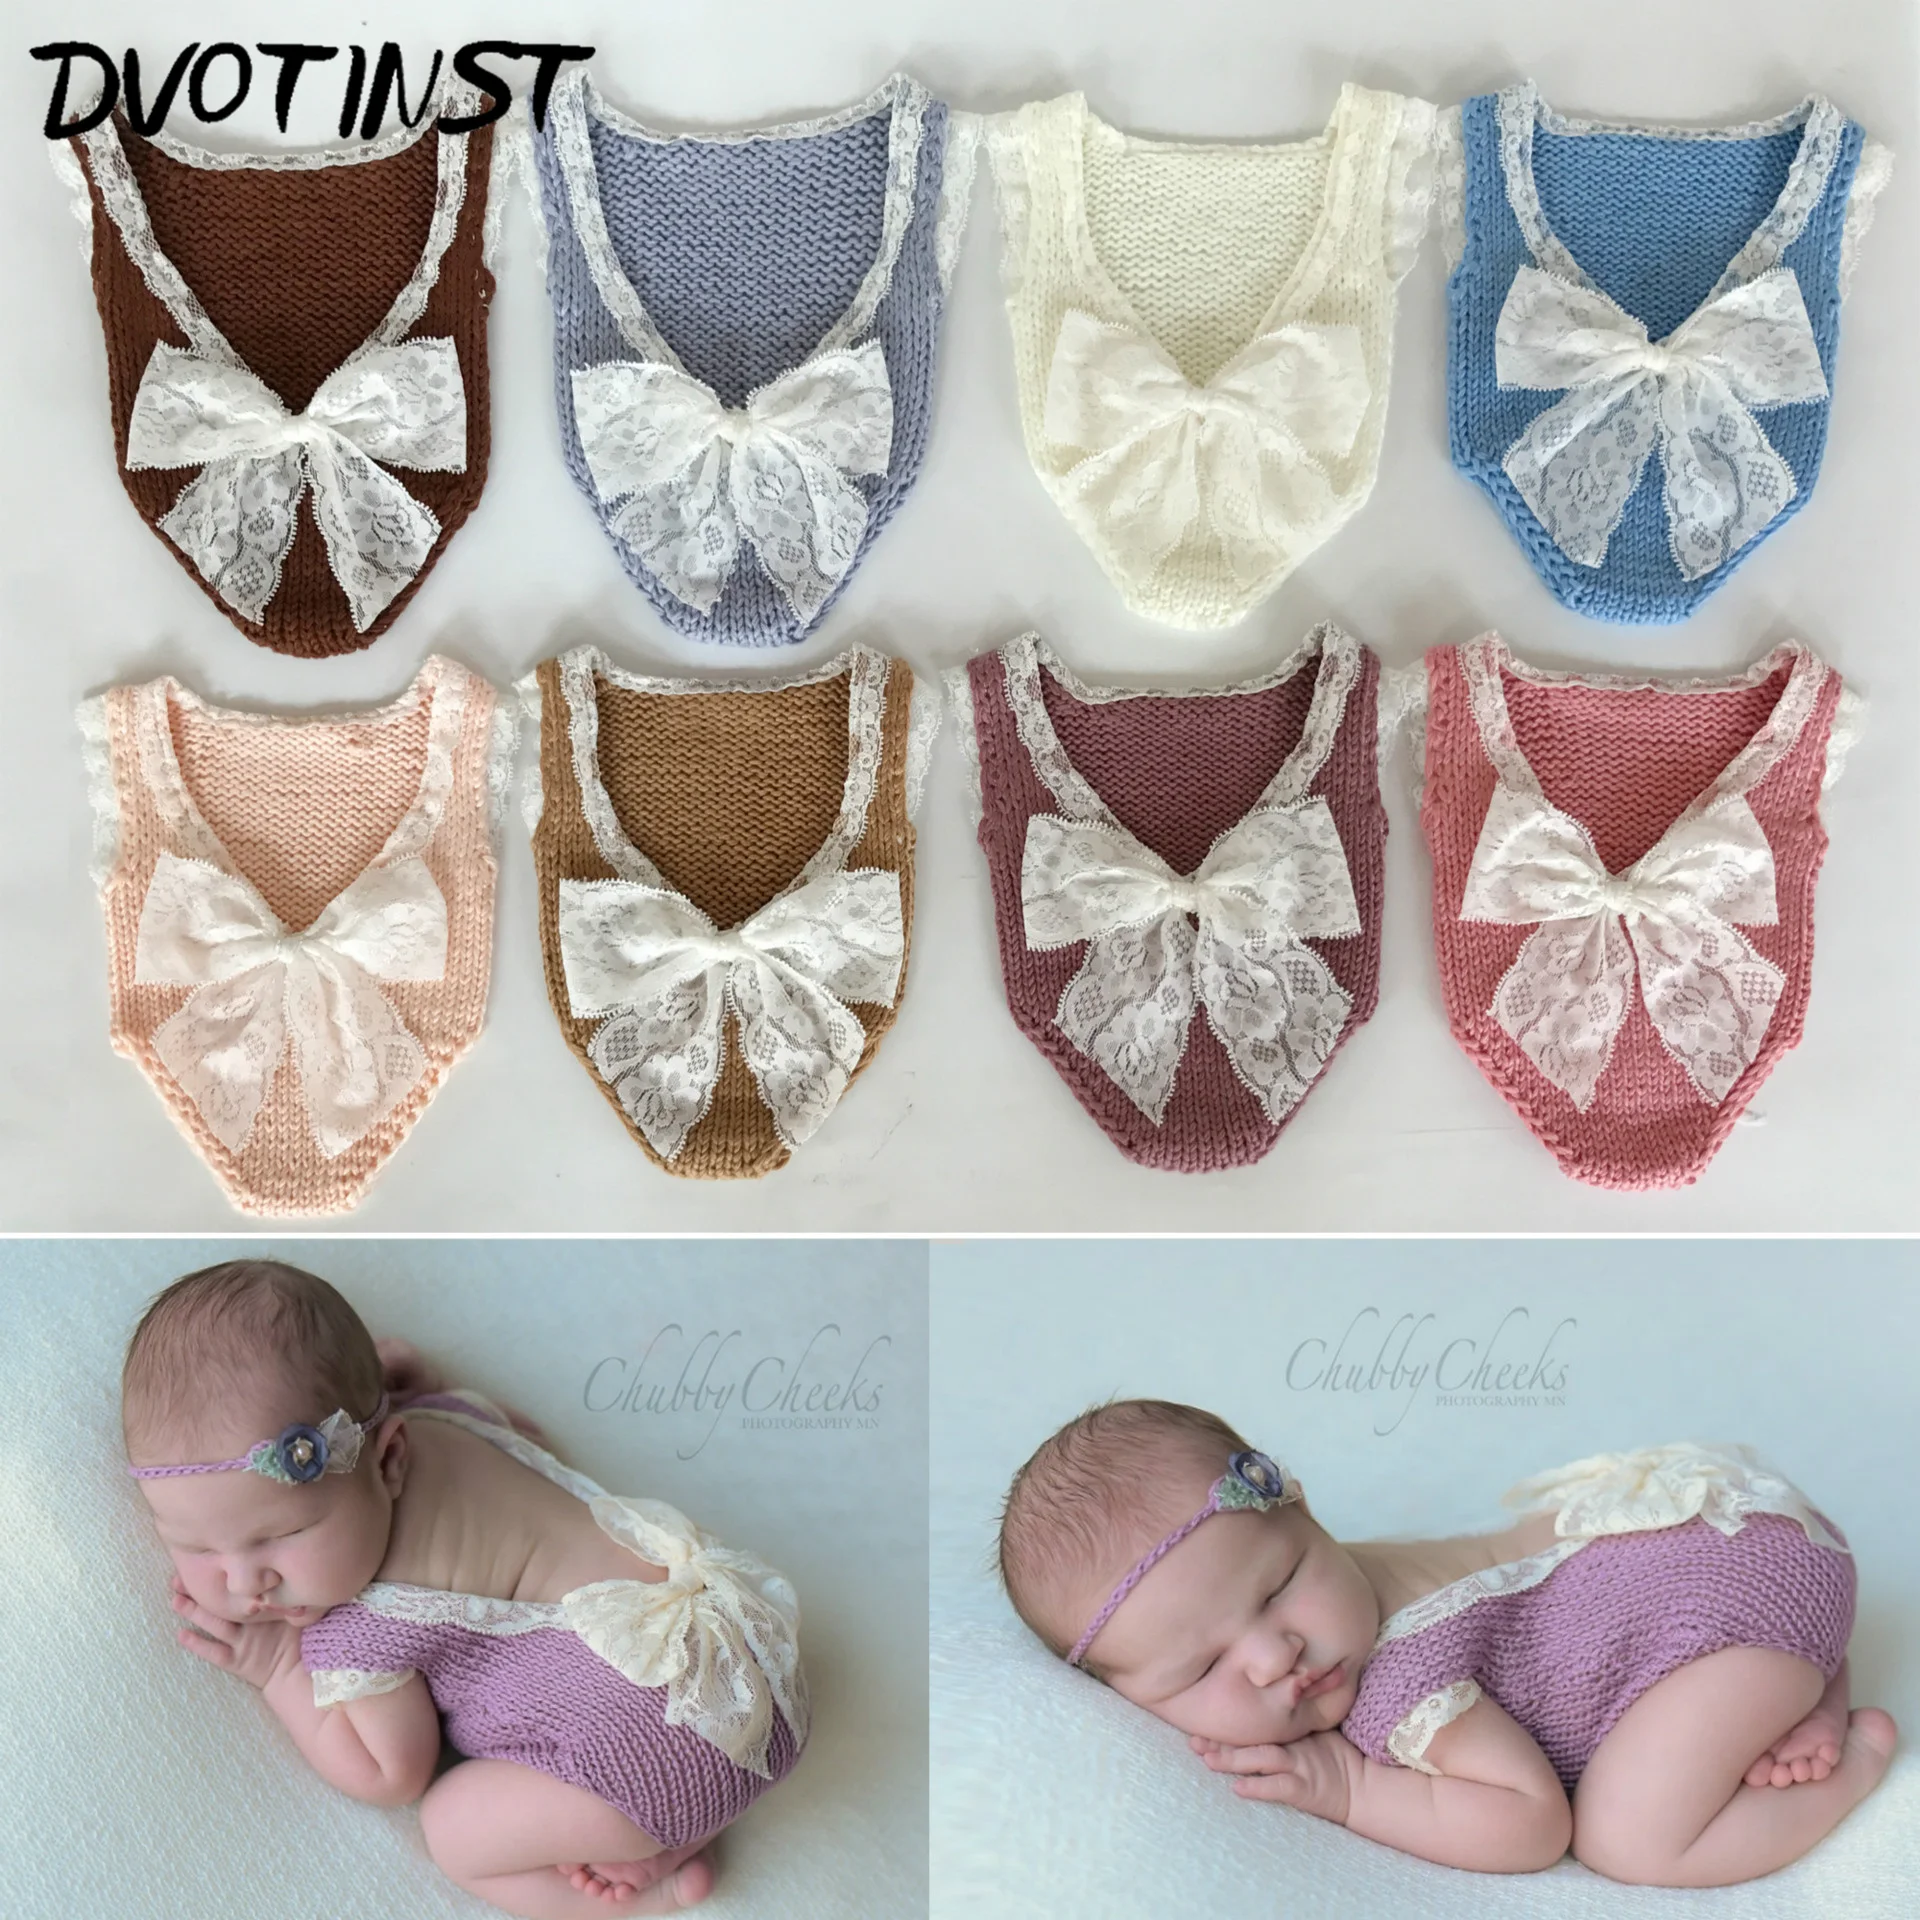 Baby Photography Props Crochet Knitted Newborn Lace Bodysuit Clothes Romper Fotografia Accessories Infantil Studio Shoot Photo